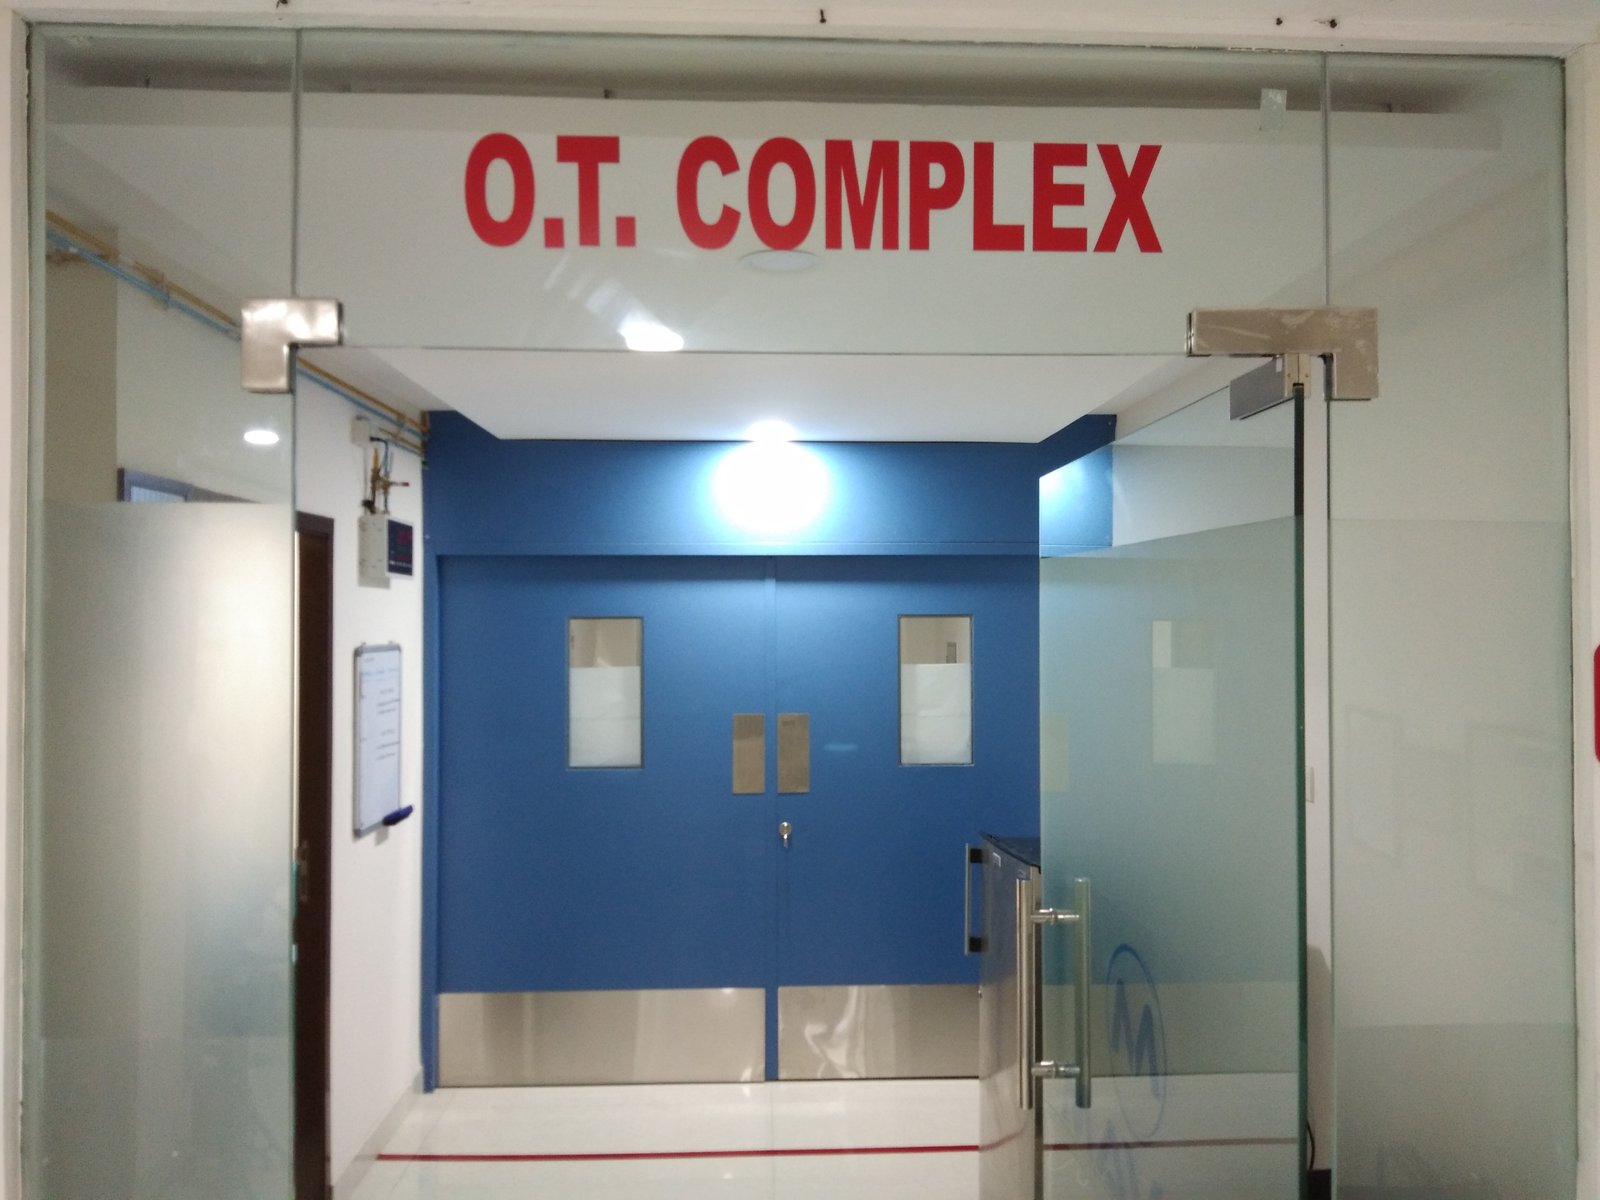 OT Complex